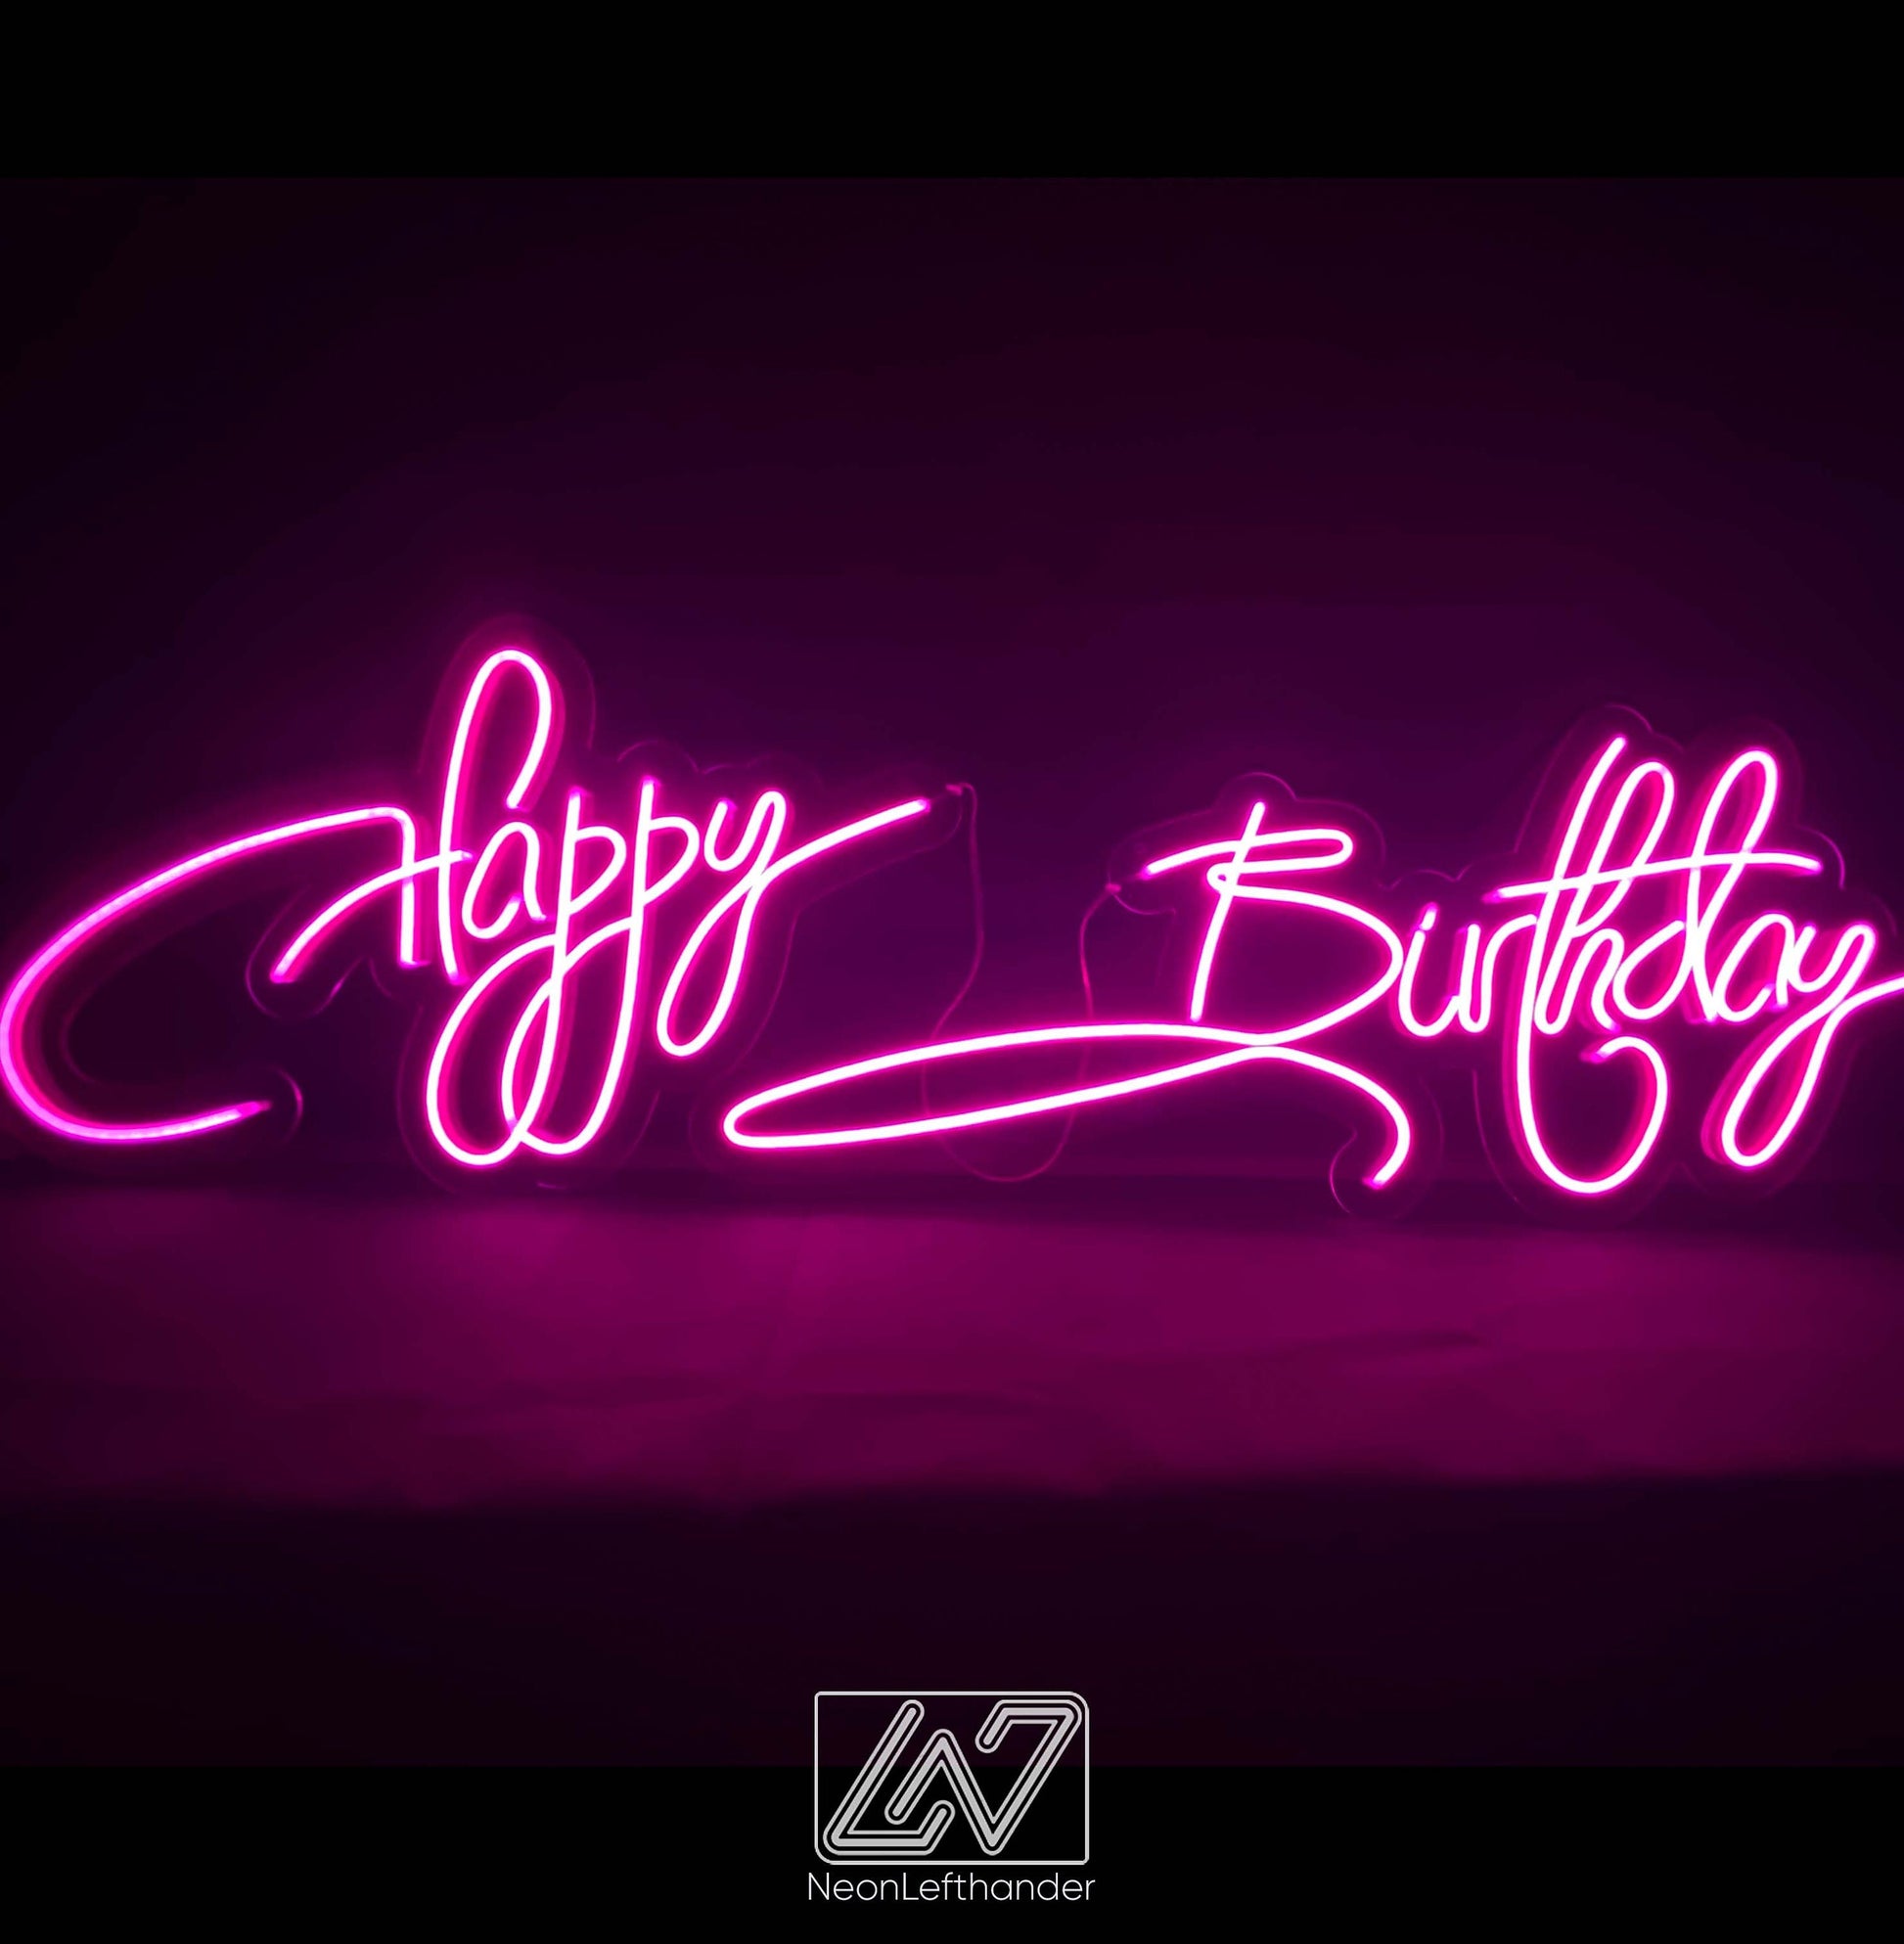 Happy Birthday - LED Neon Sign, Birthday Present, Kids Birthday Party Neon Sign, Birthday Backdrop Sign, Event Decor, Backdrop Decorations